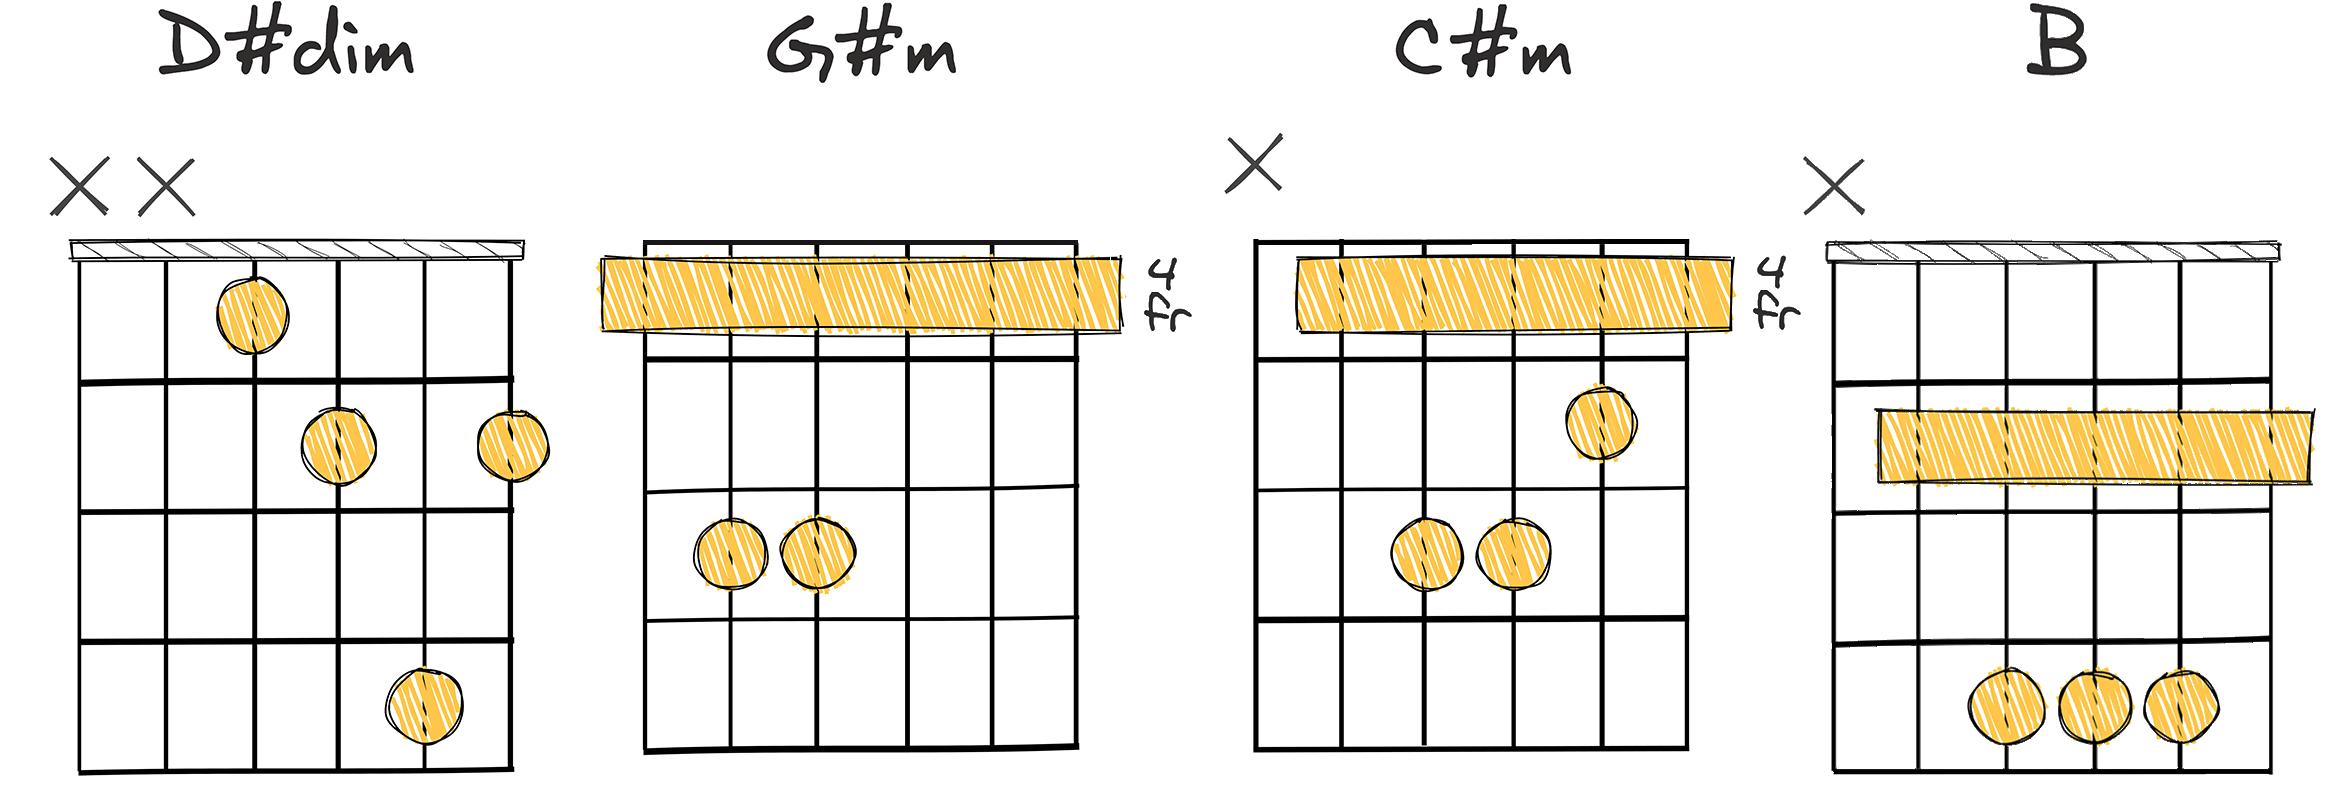 IV-I-V-vi (4-1-5-6) chords diagram